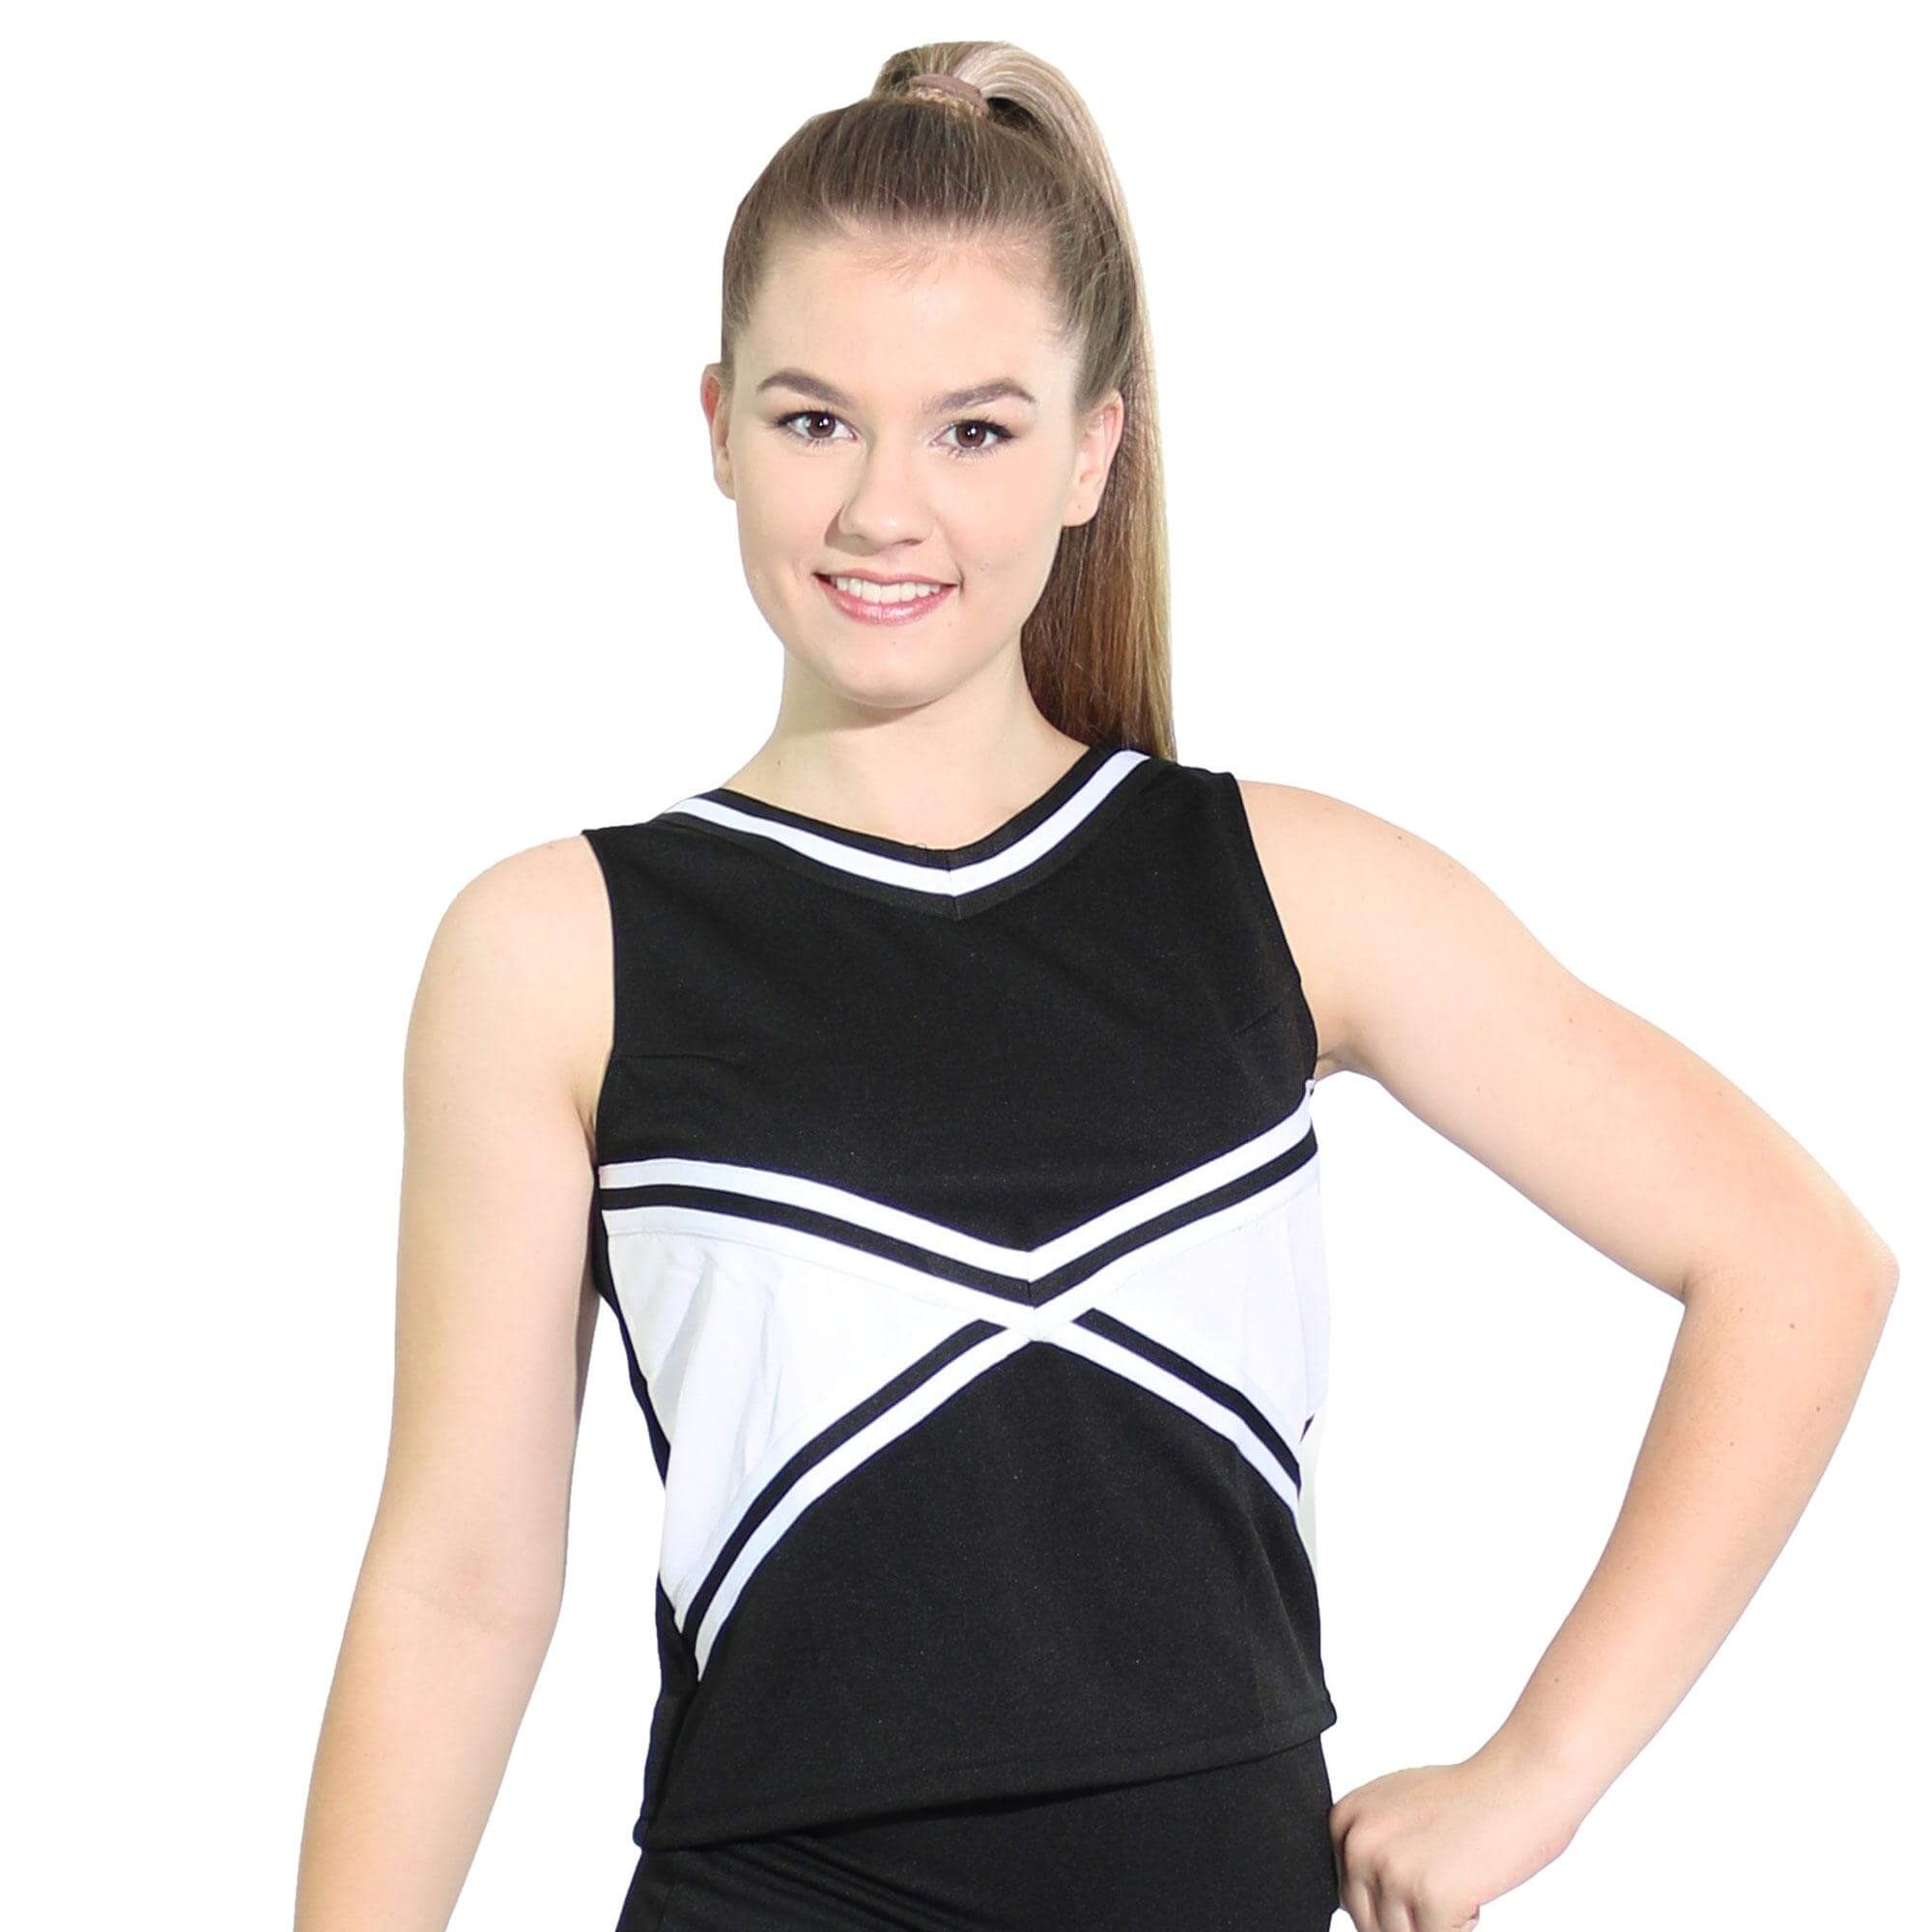 Danzcue Adult 2-Color Kick Sweetheart Cheerleaders Uniform Shell Top - Click Image to Close